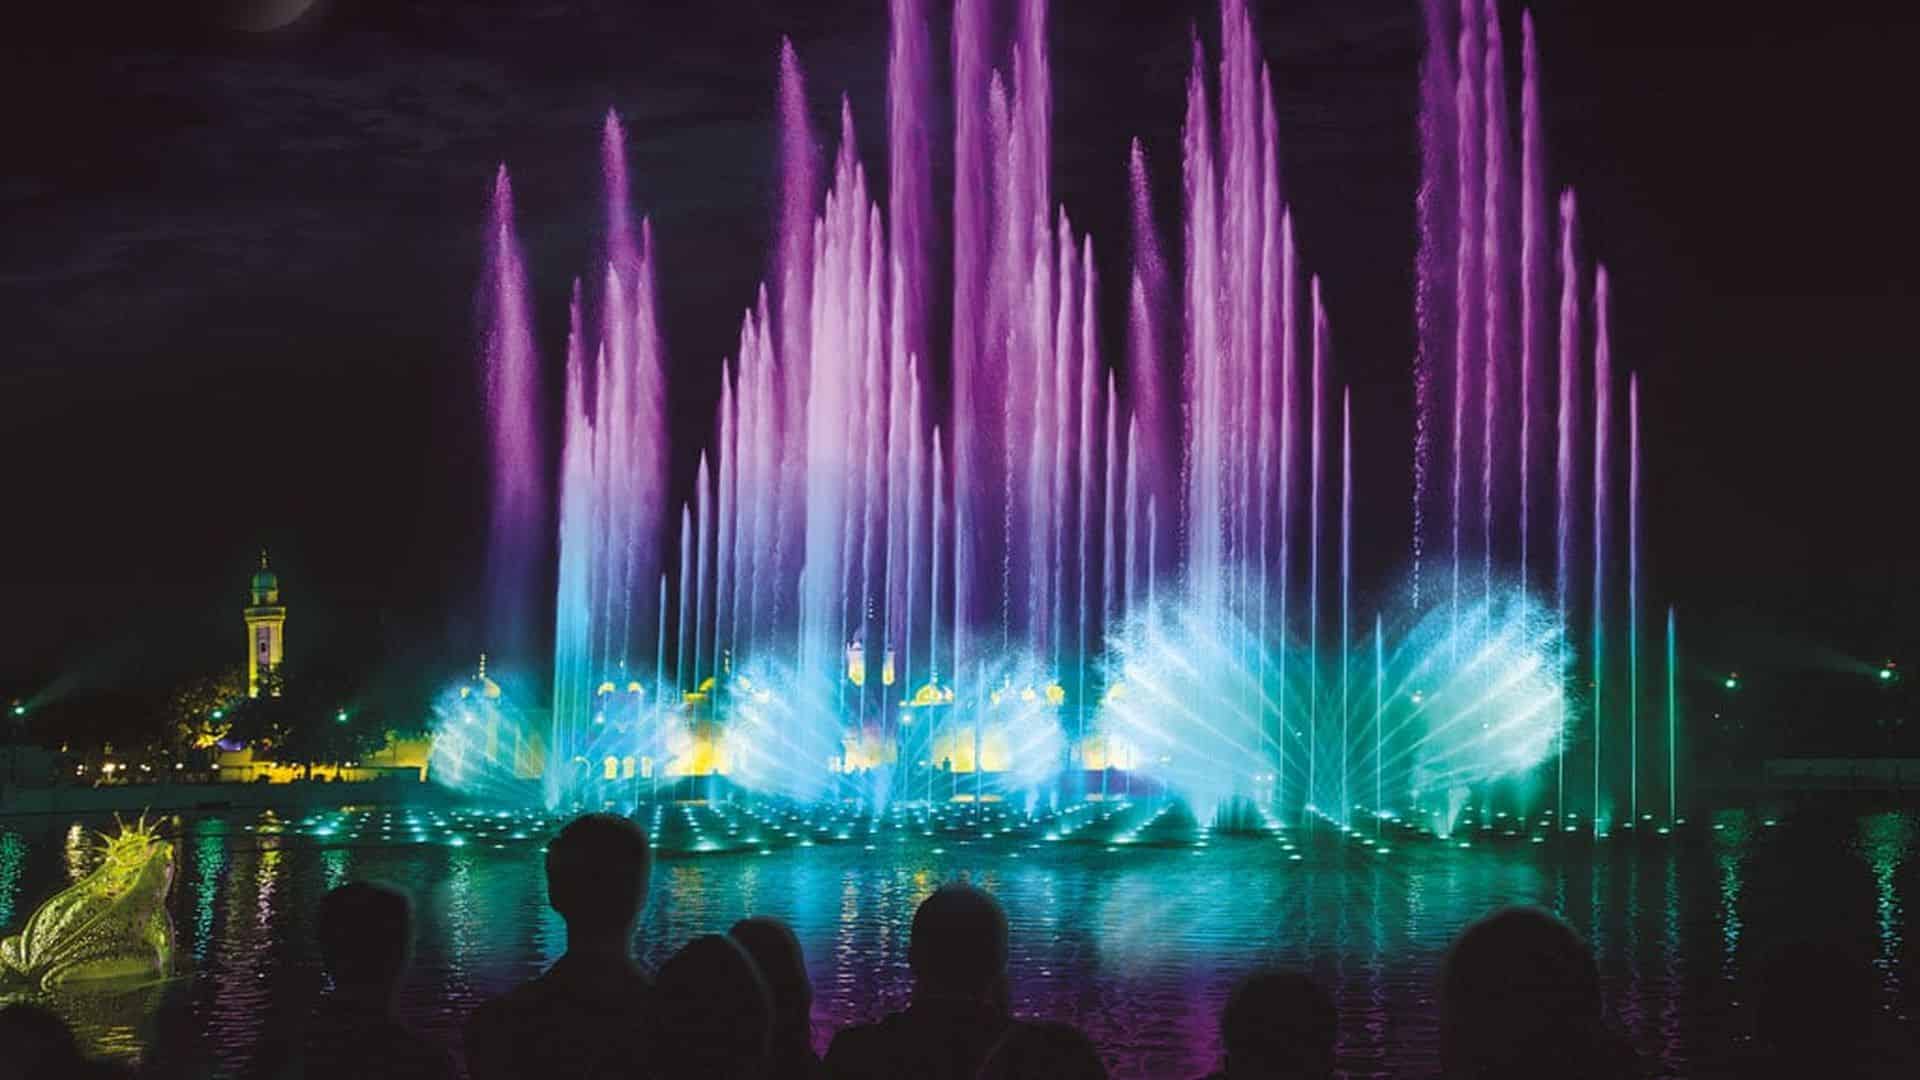 Efteling - spectacle de fontaines